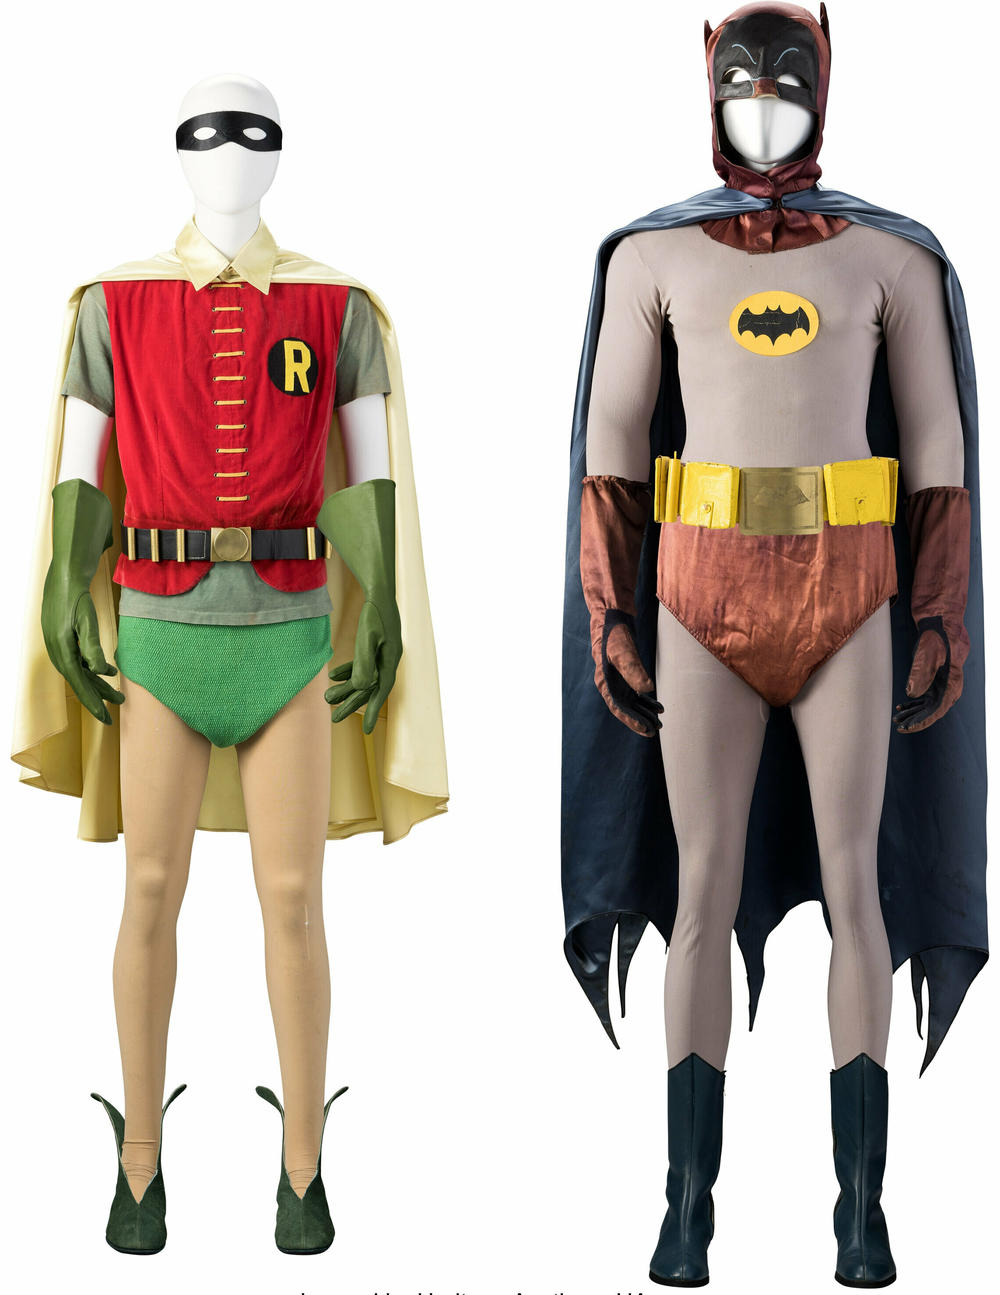 The costumes for Burt Ward's Robin and Adam West's Batman.